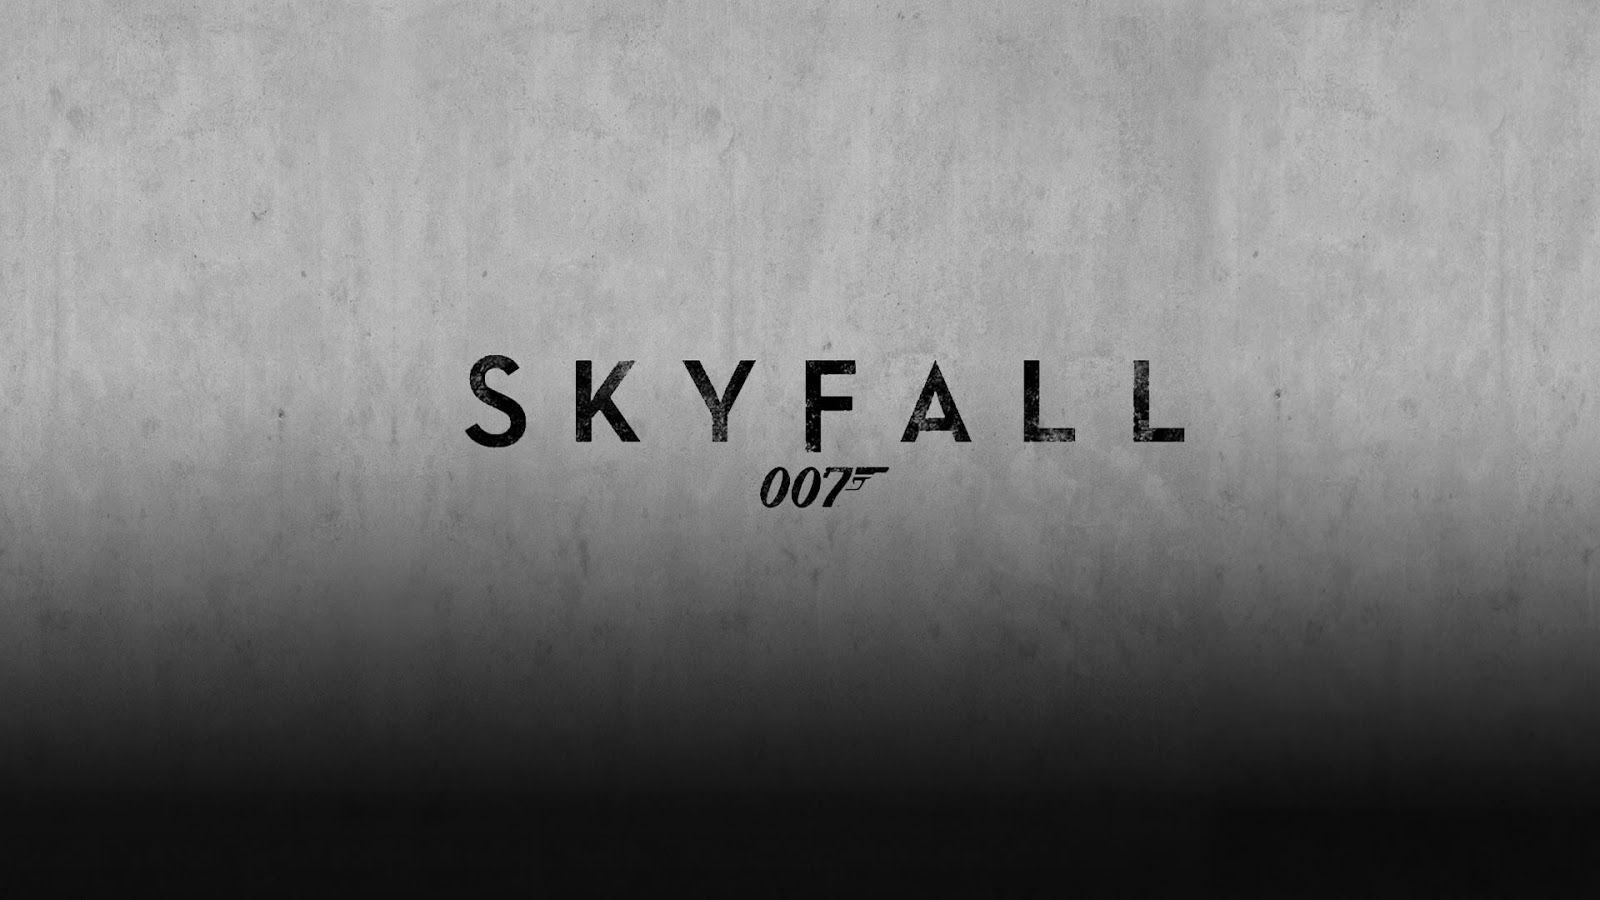 HD Wallpaper for iPhone 5 Bond 007 Skyfall Wallpaper